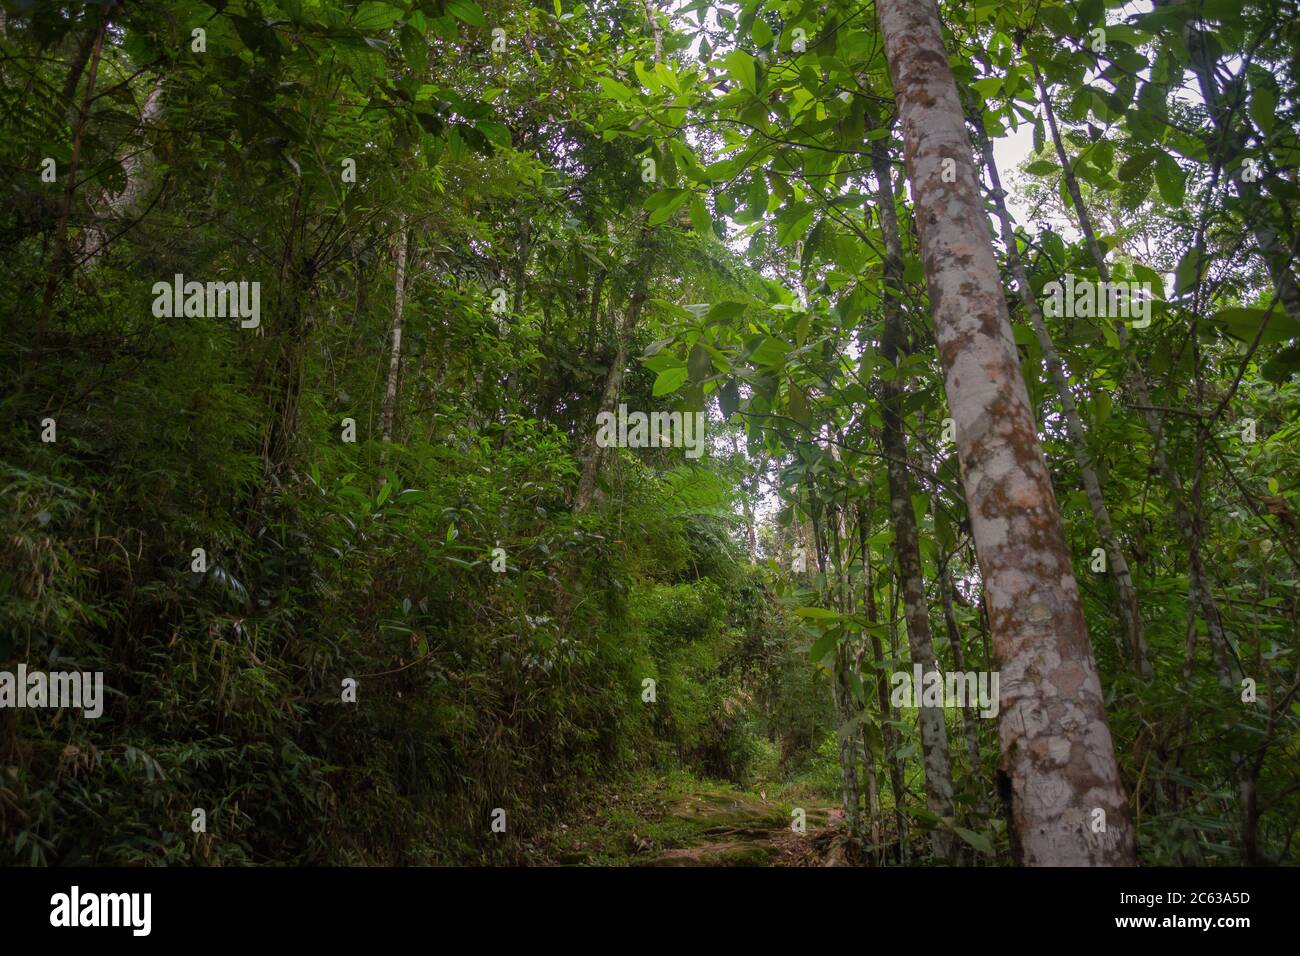 Atlantic rainforest in Minas Gerais, Brazil Stock Photo